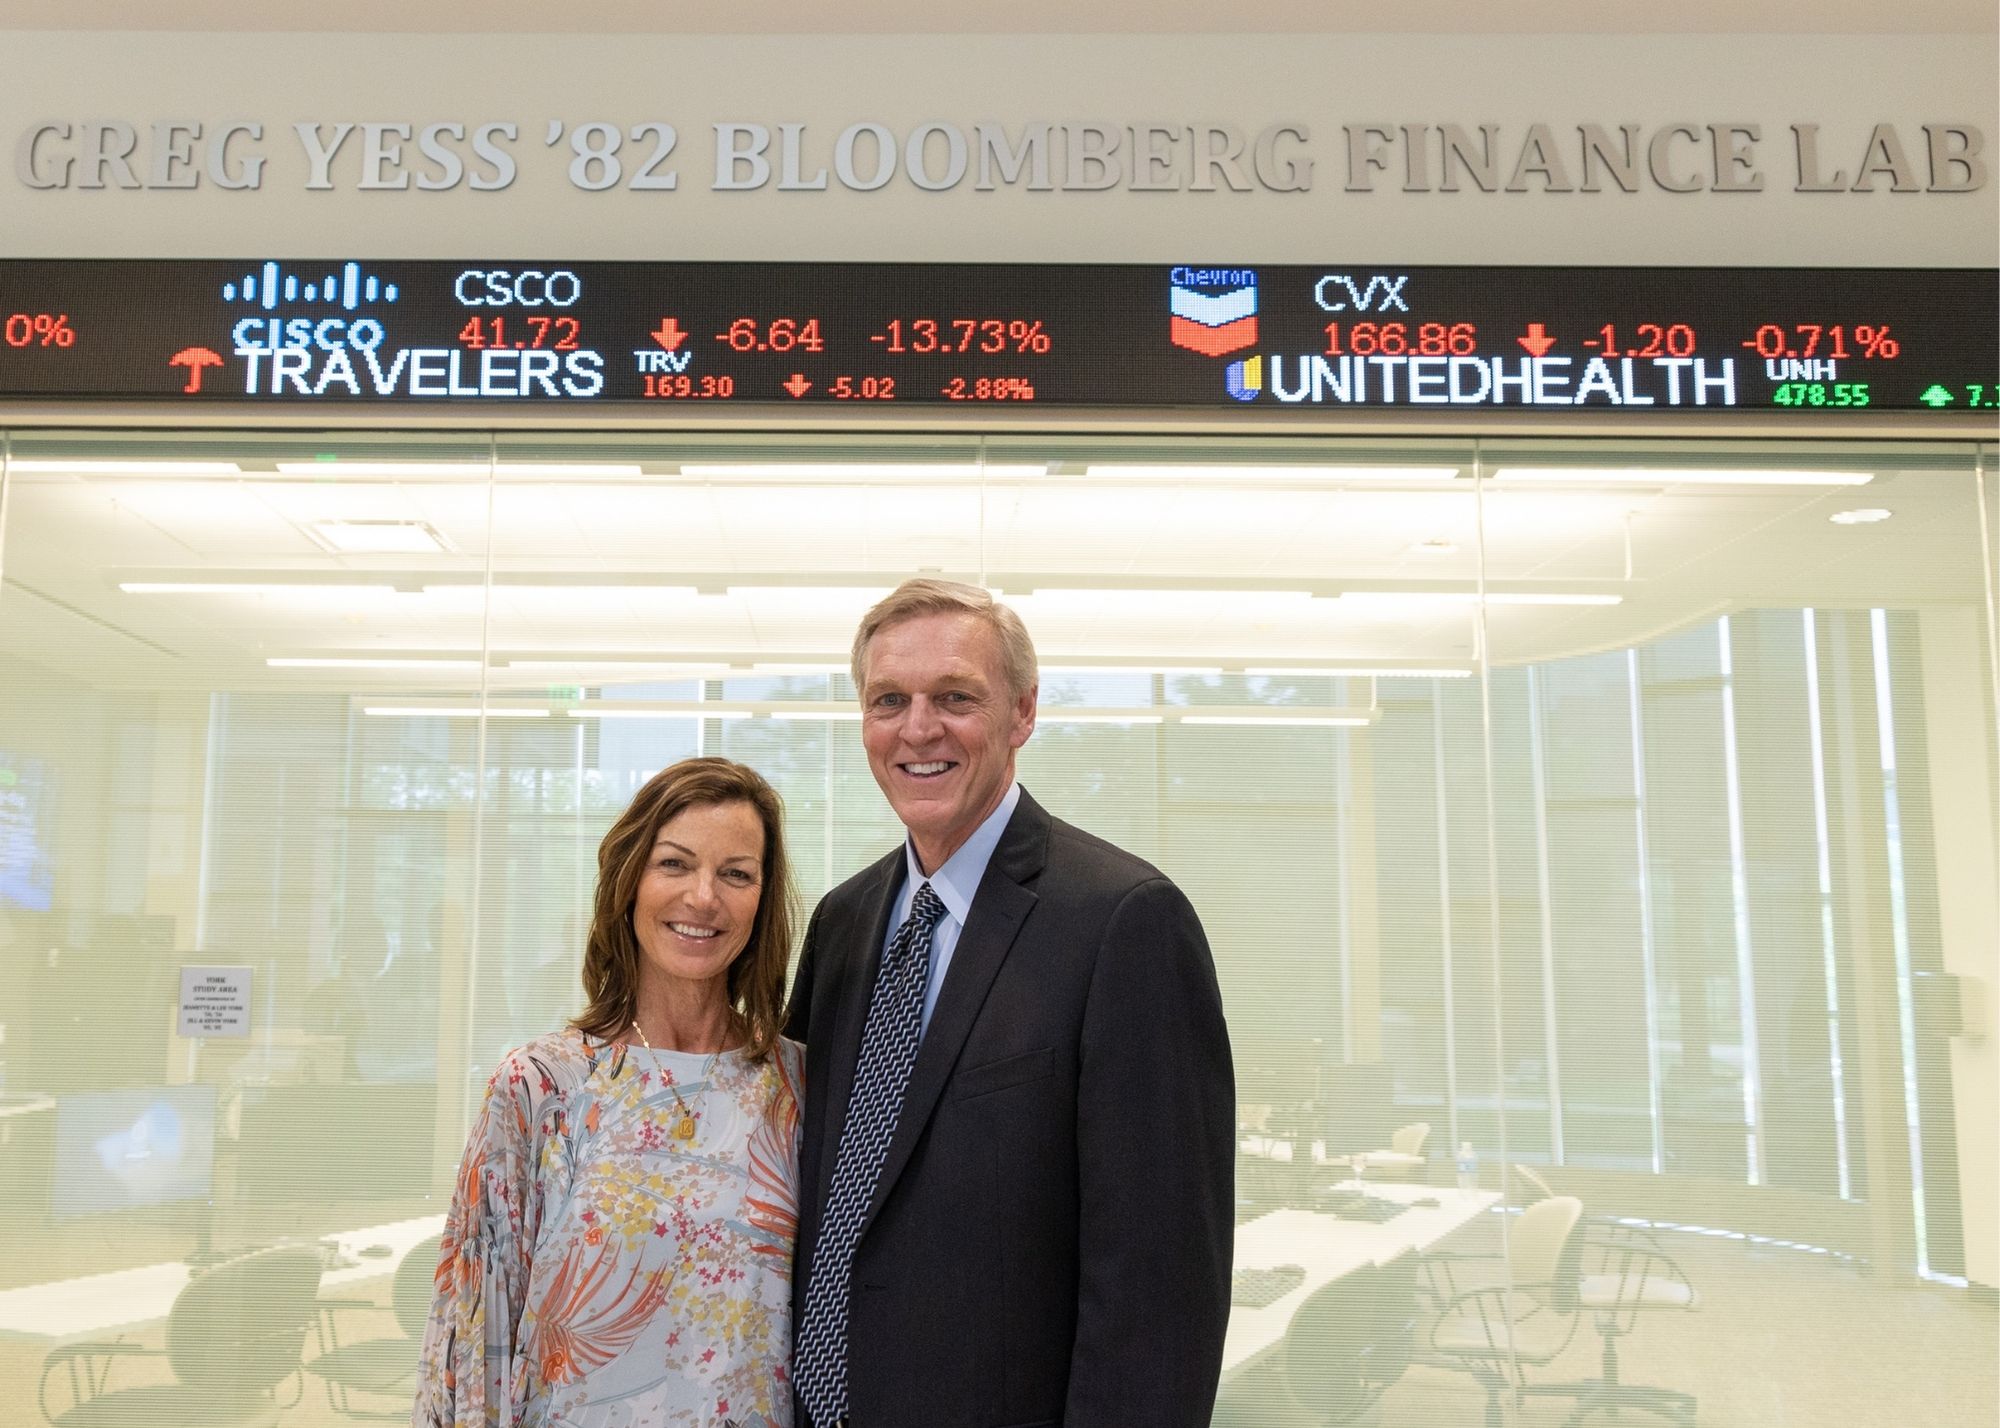 Greg and Kari Yess outside Bloomberg Finance Lab